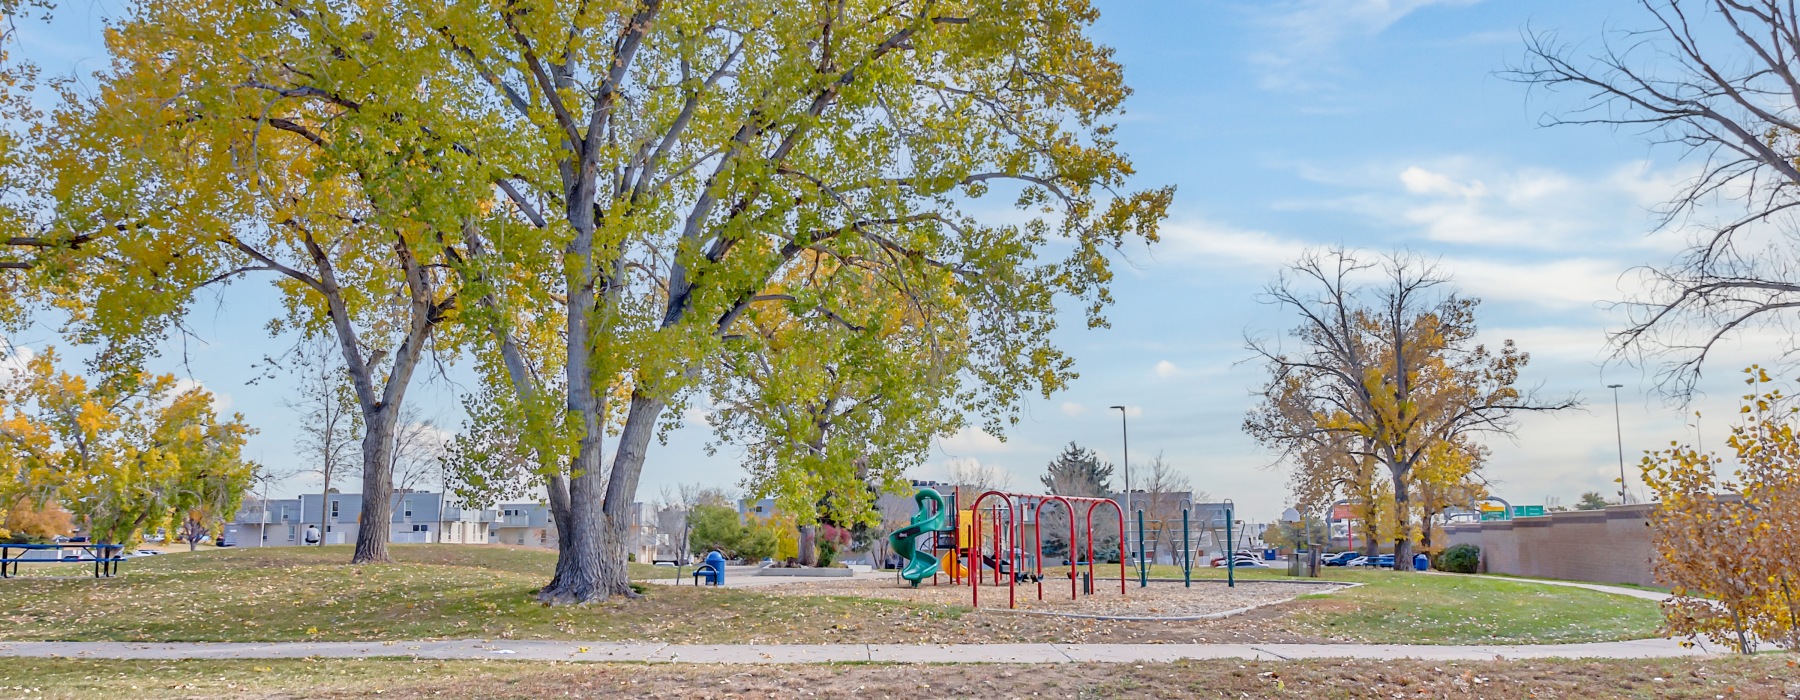 Park with playground